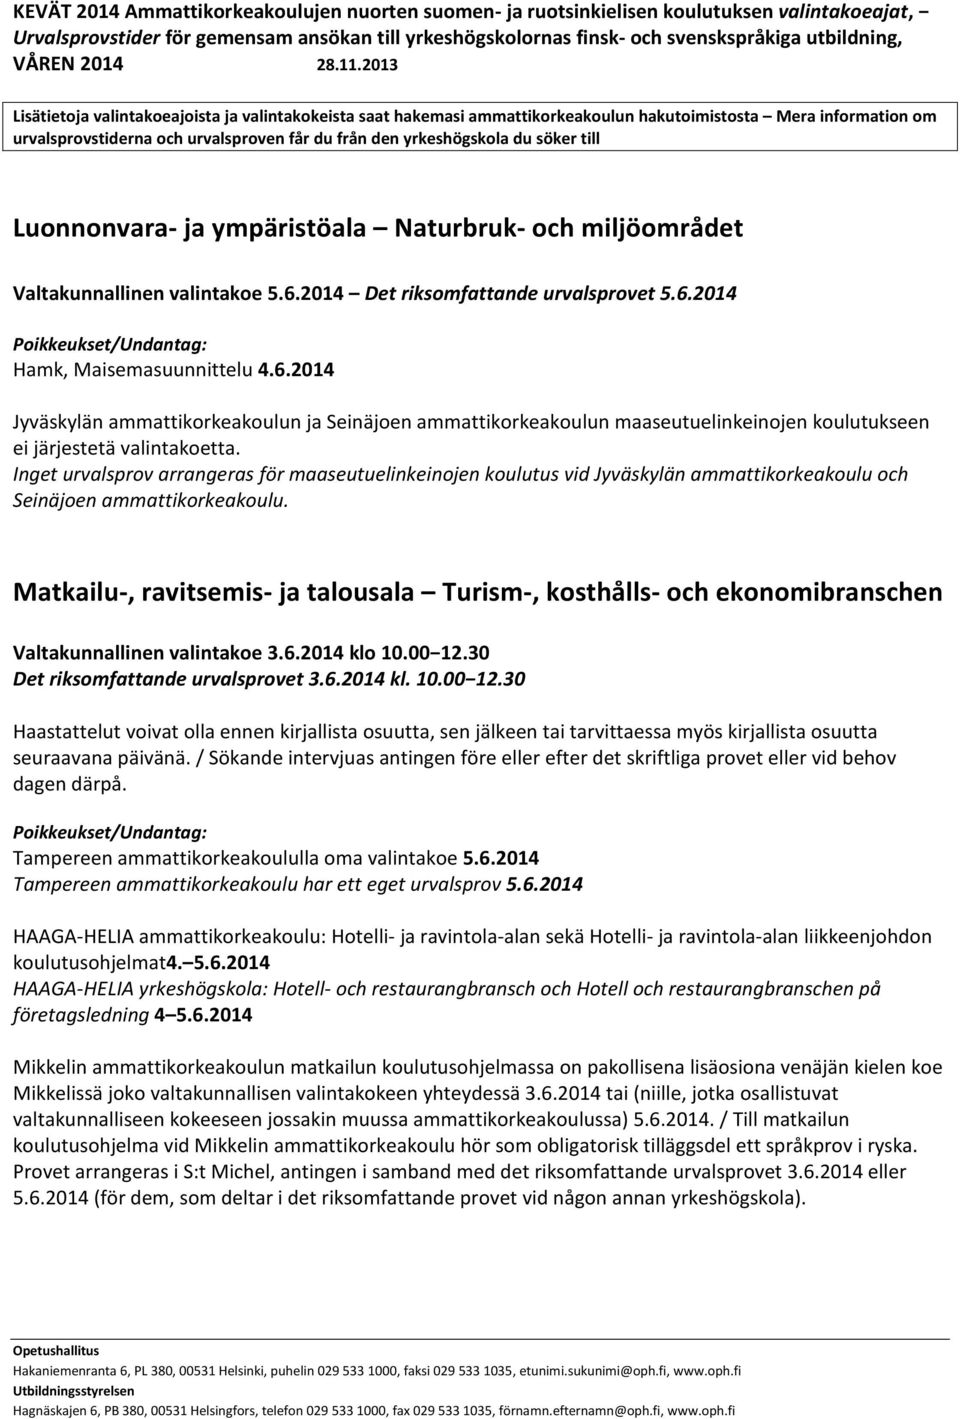 Inget urvalsprov arrangeras för maaseutuelinkeinojen koulutus vid Jyväskylän ammattikorkeakoulu och Seinäjoen ammattikorkeakoulu.